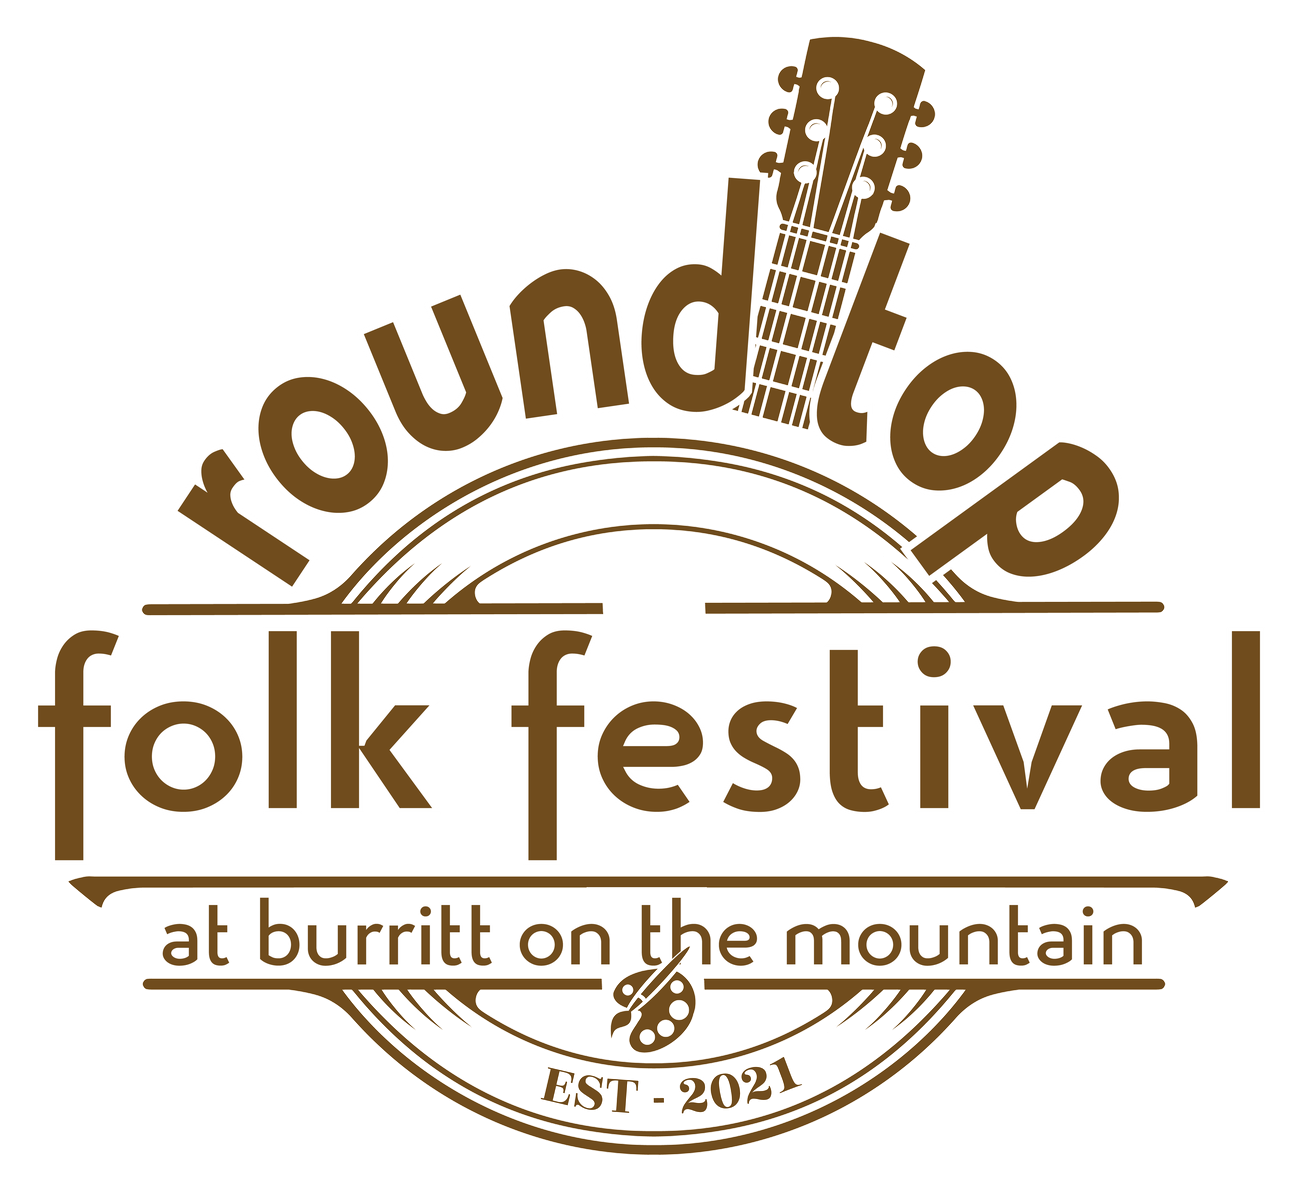 Round Top Folk Festival planned for Burritt on the Mountain - The ...